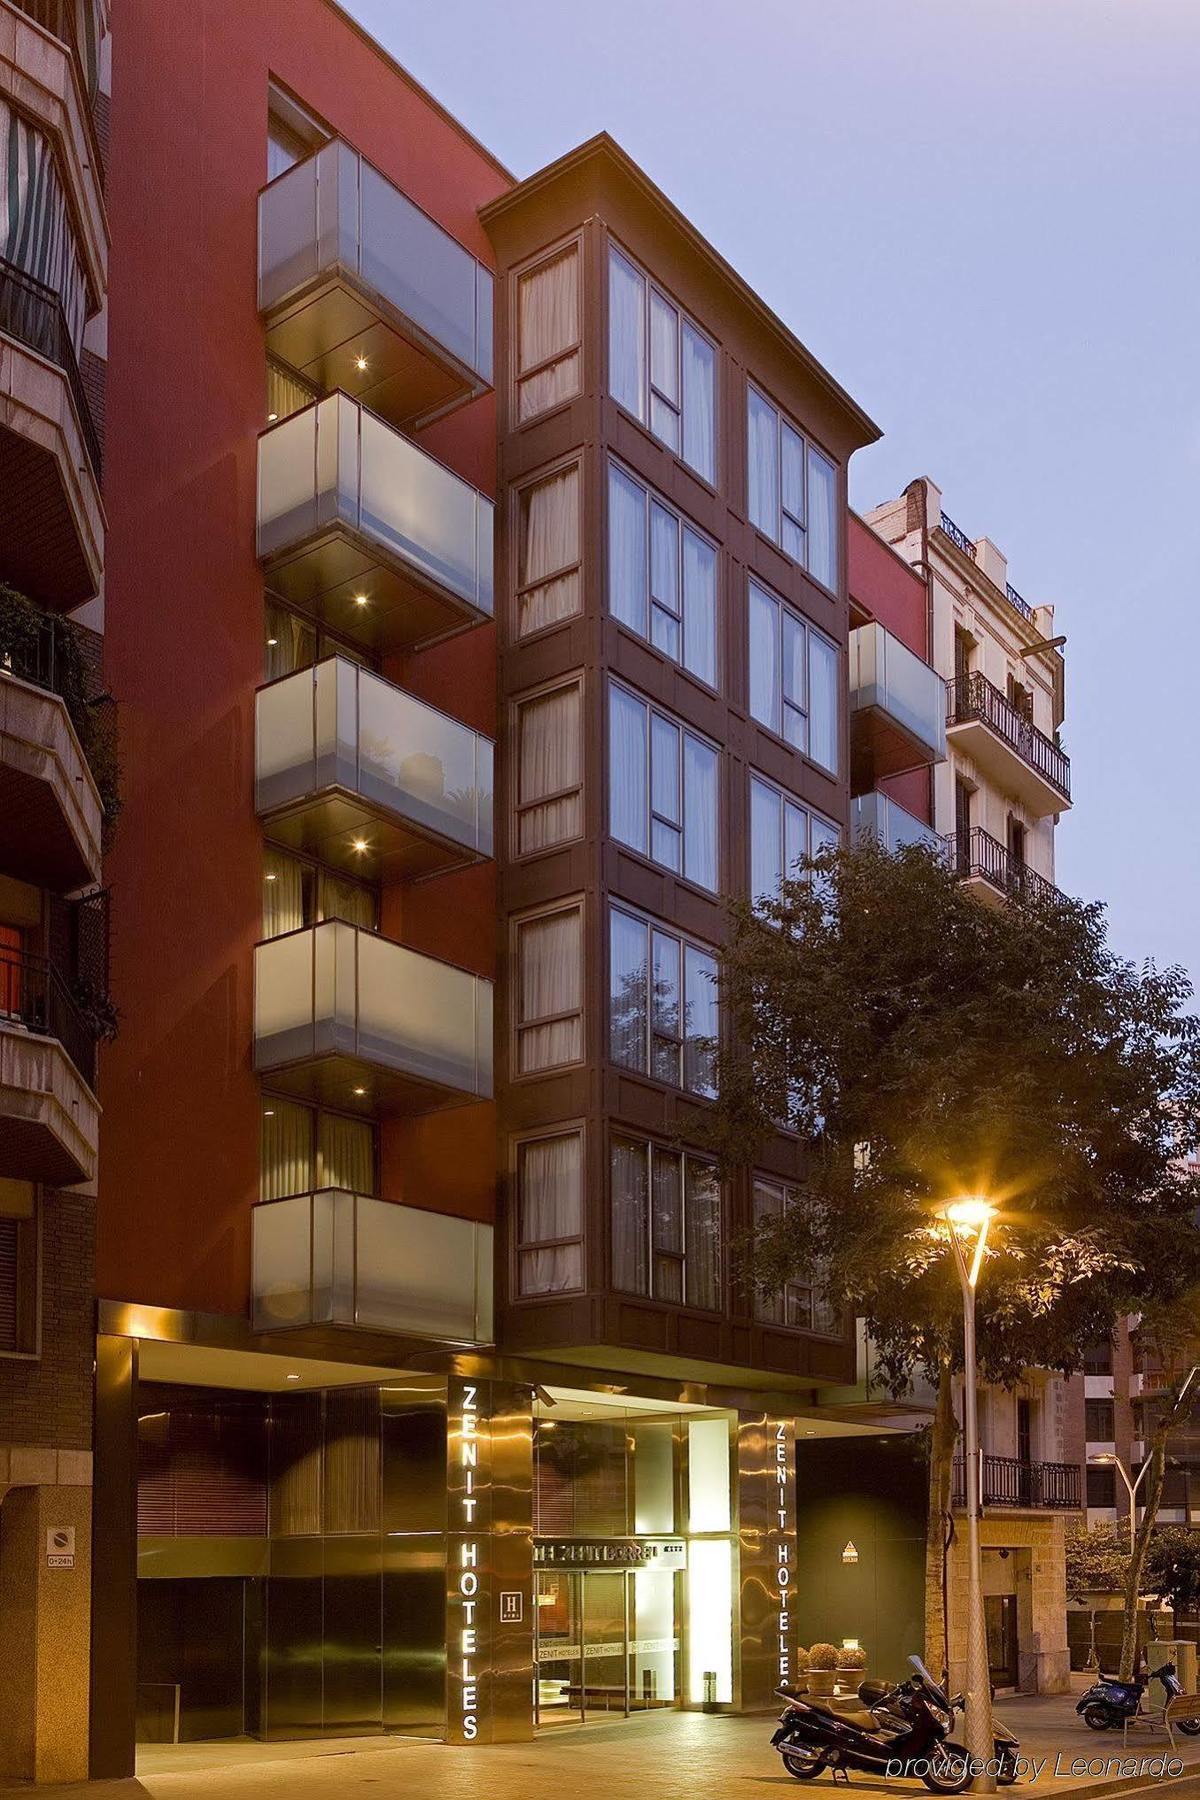 Zenit Borrell Hotel Barcelona Exterior foto